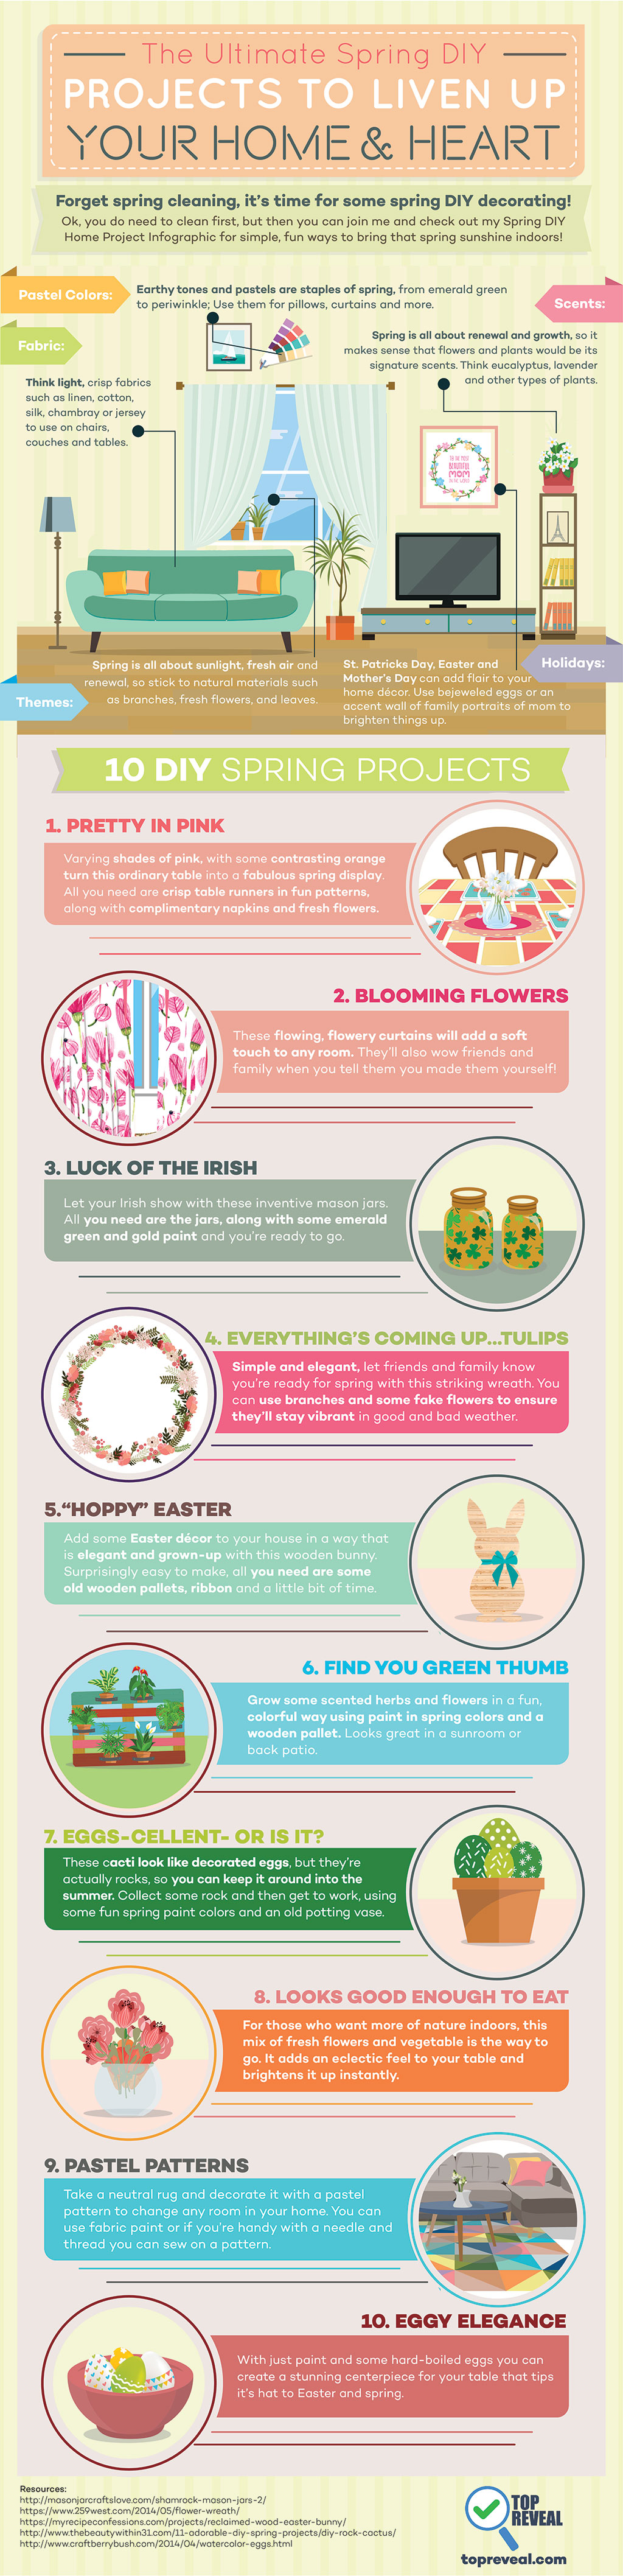 DIY Spring Decorating Ideas Infographic